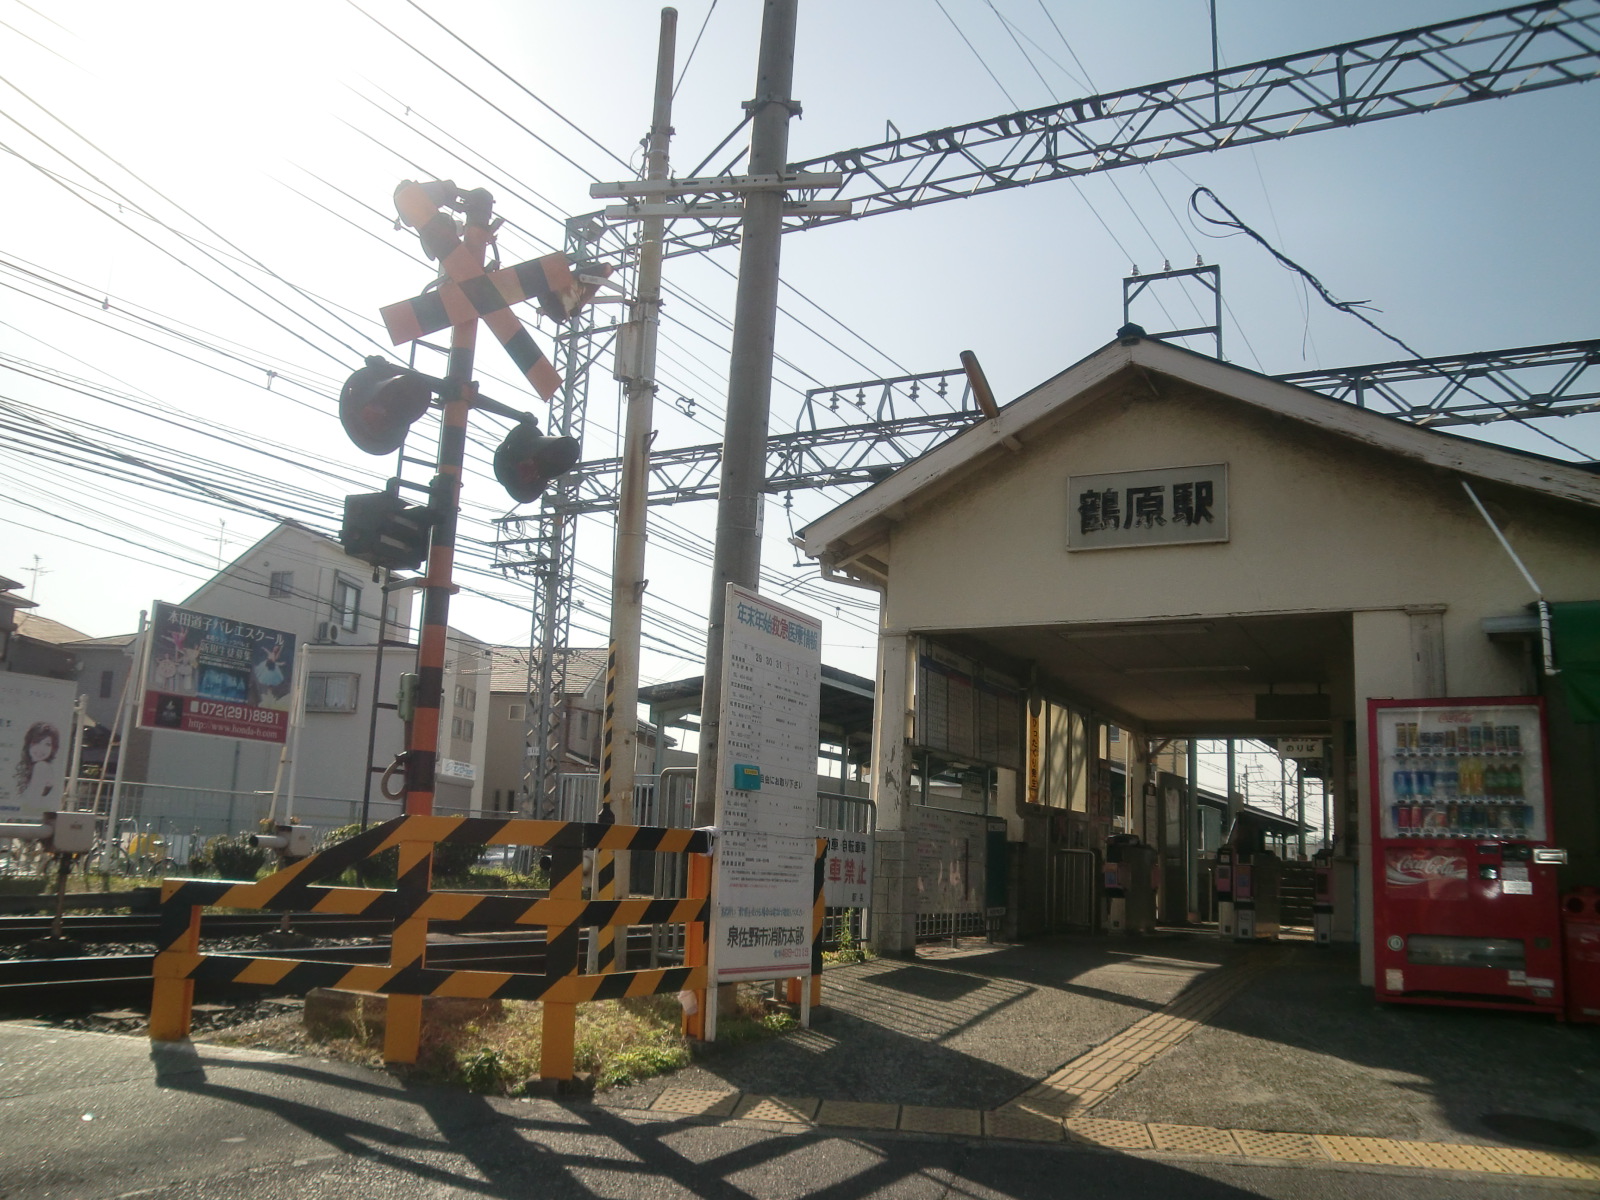 Other. Tsuruhara Station